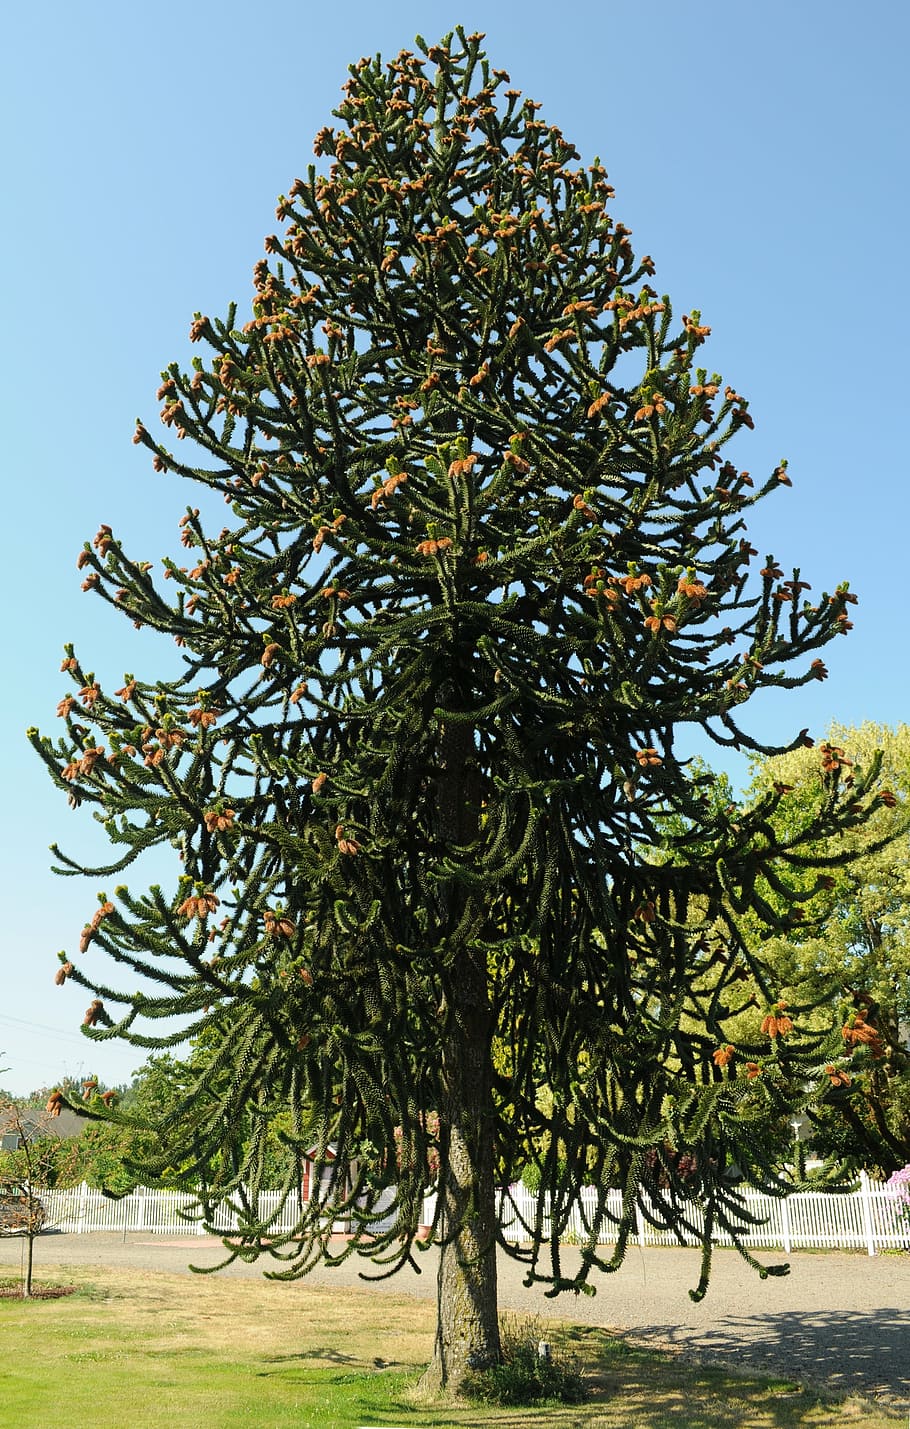 araucaria araucana, monkey puzzle tree, monkey tail tree, chilean pine